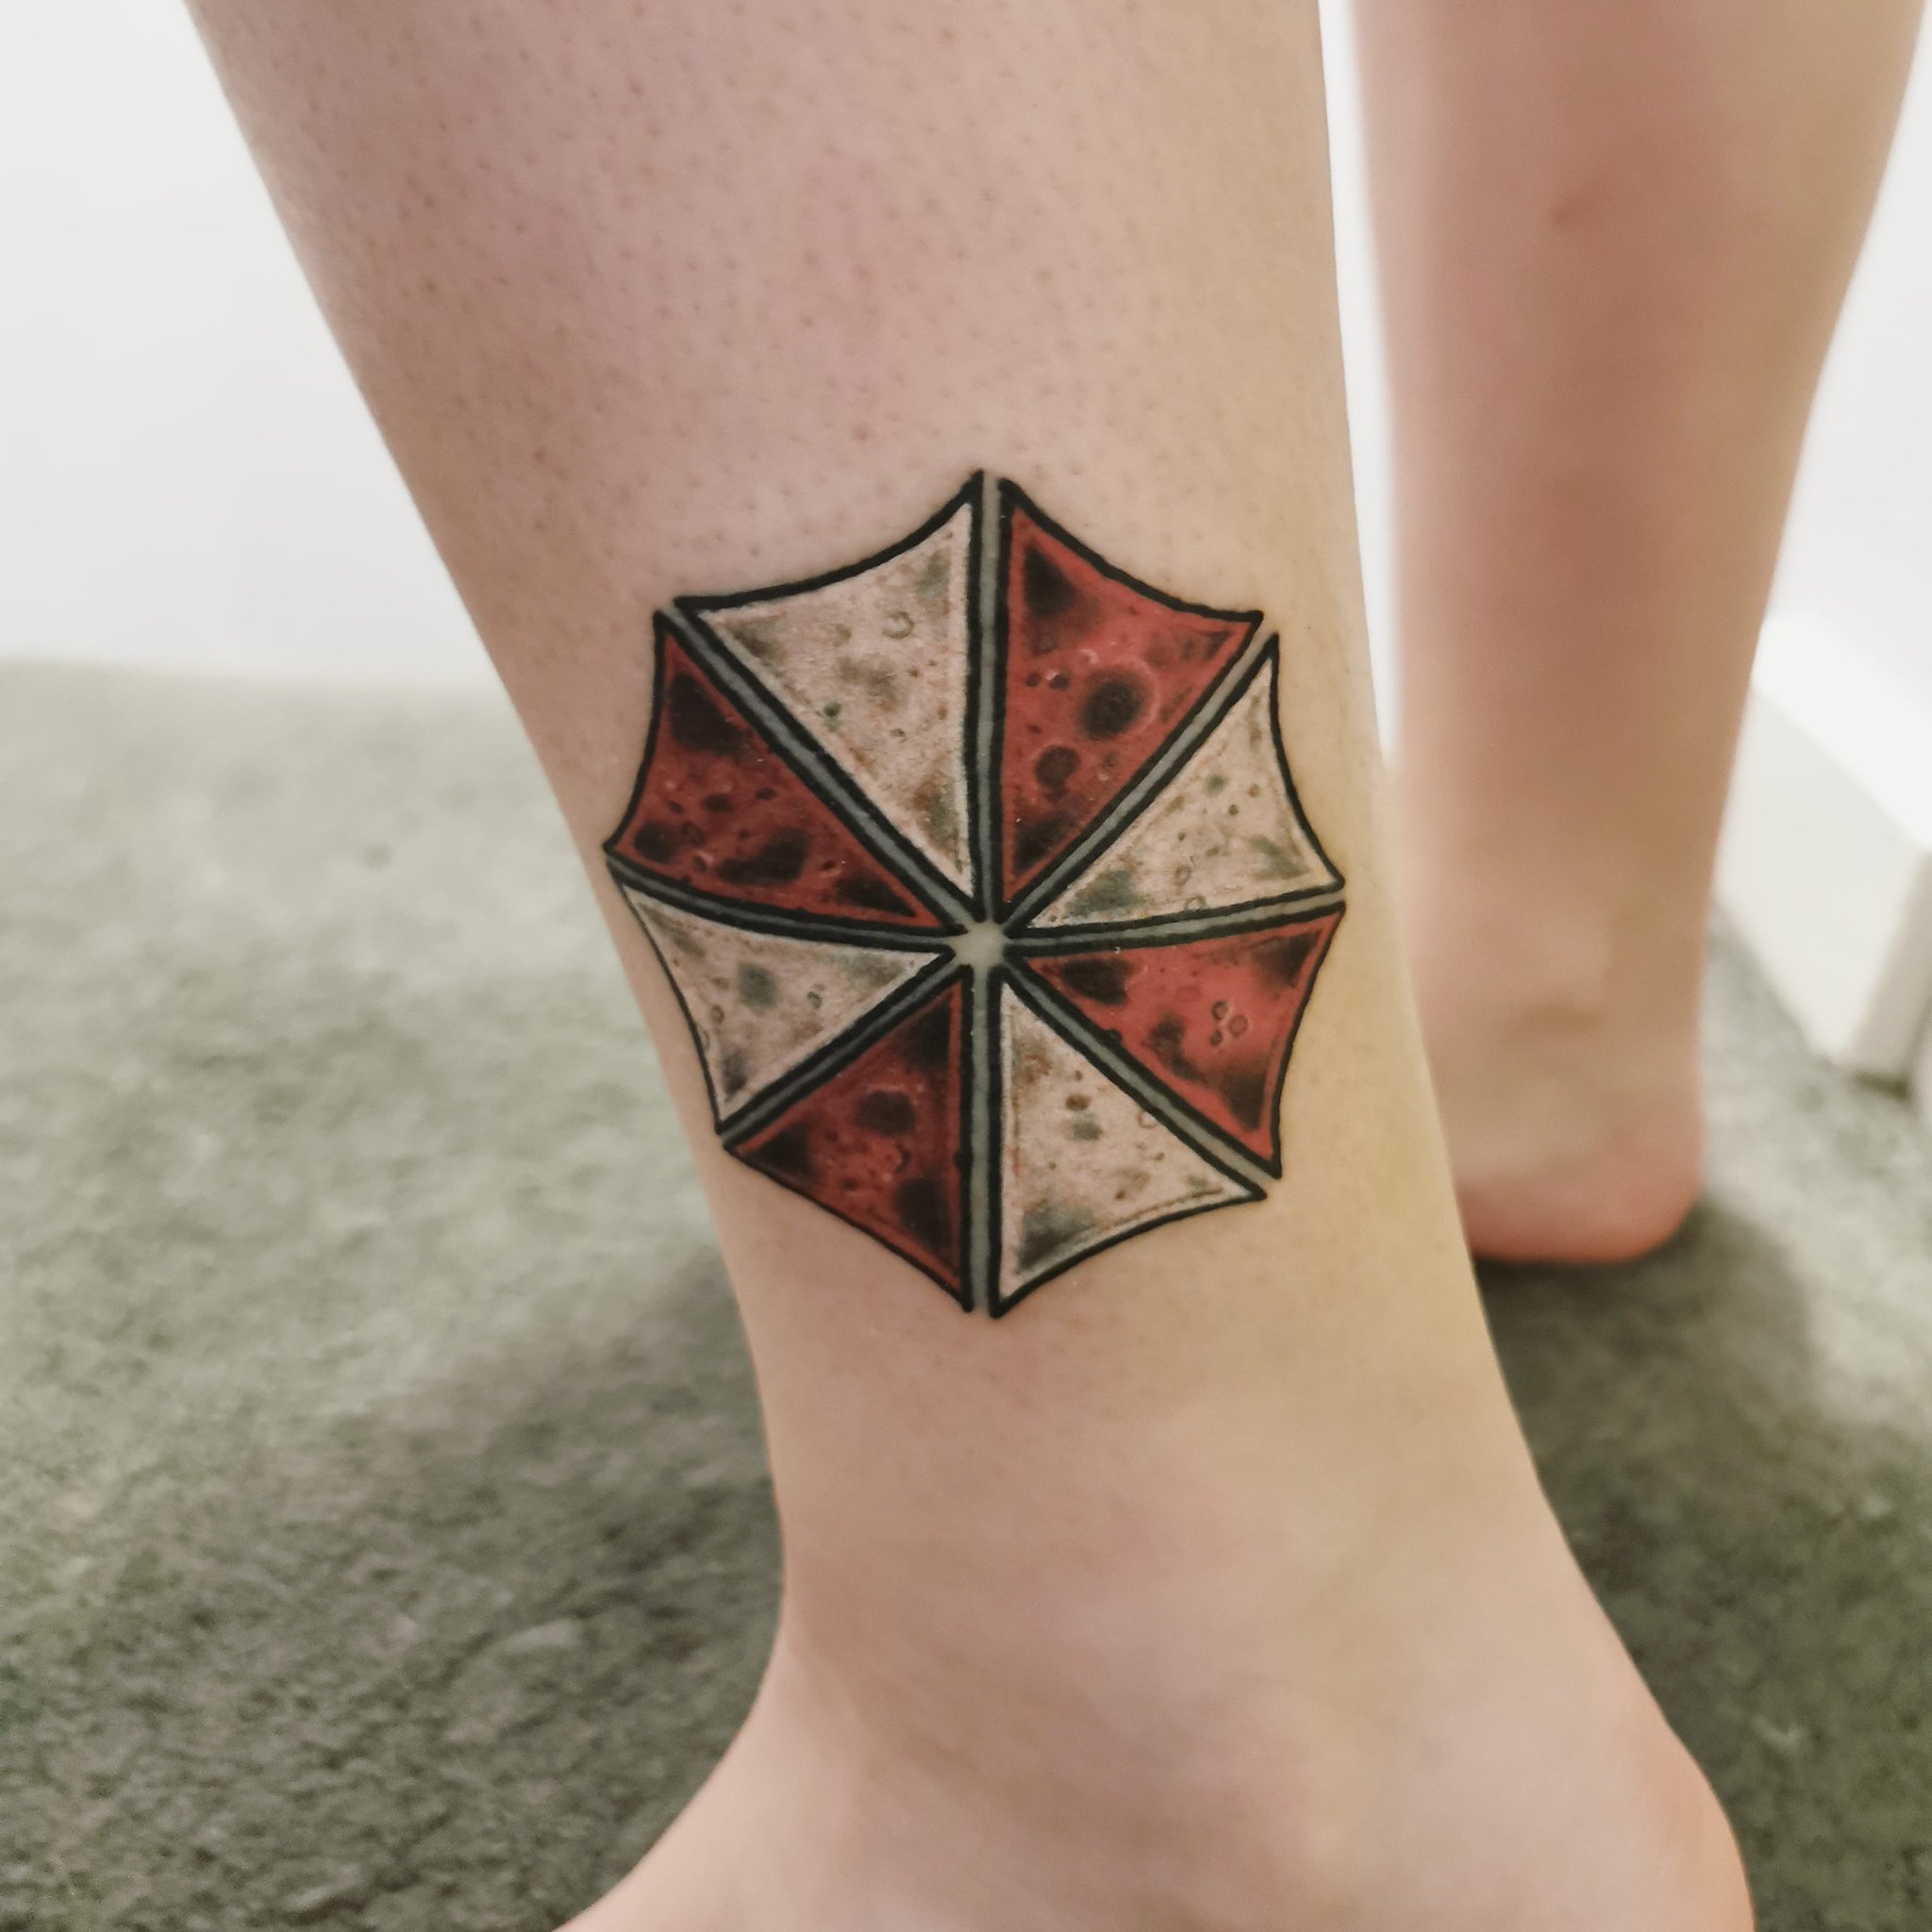 Umbrella Corp tattoo  Arm tattoos for guys forearm Zombie tattoos Resident  evil tattoo